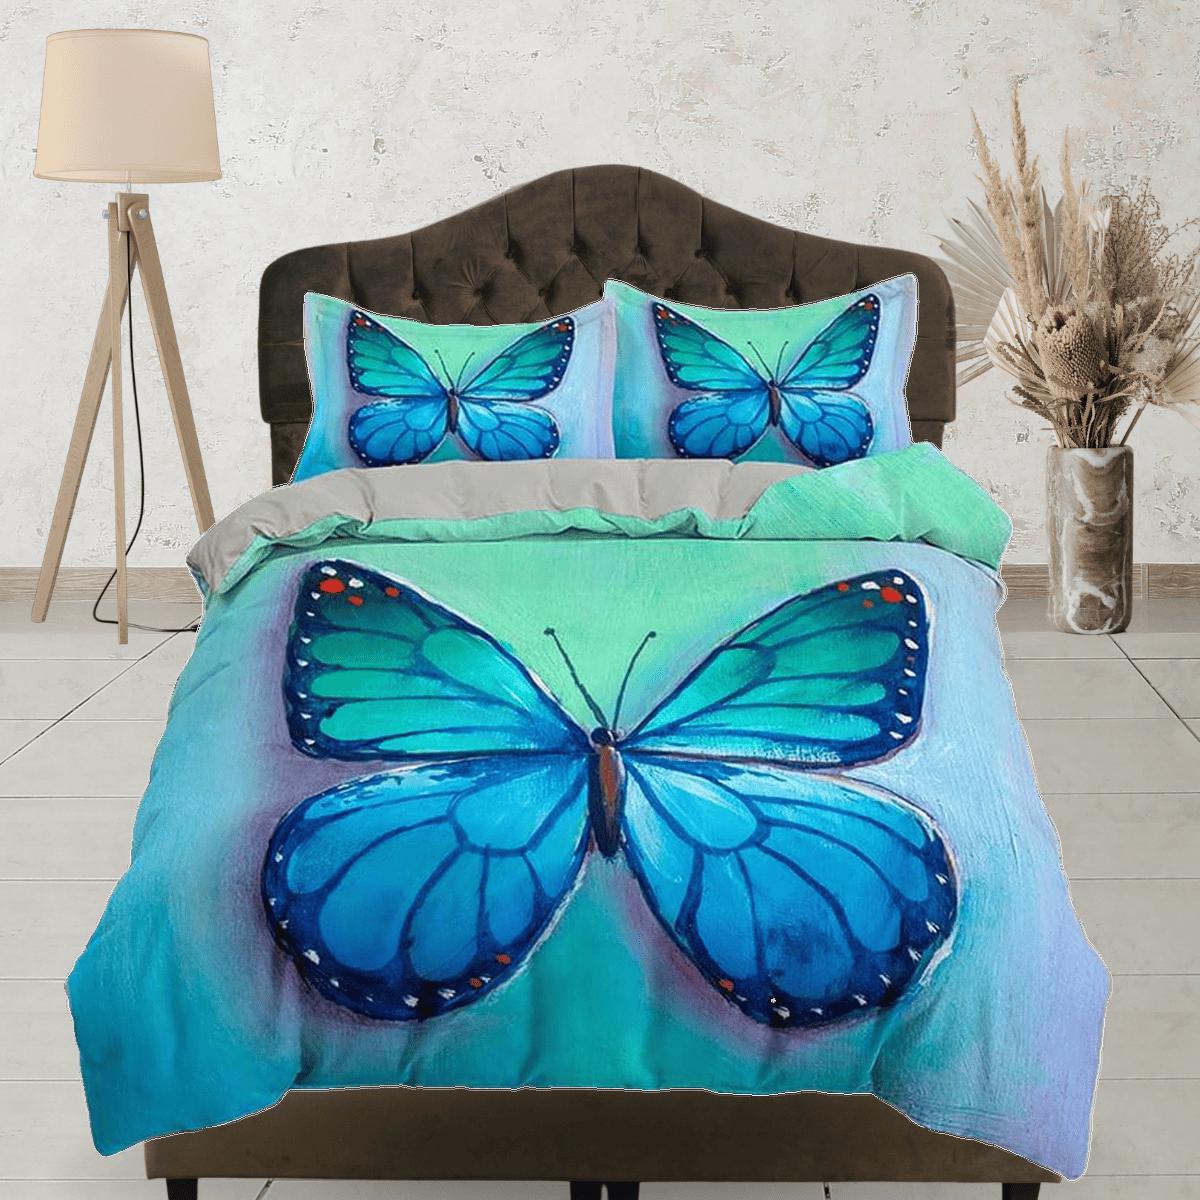 daintyduvet Blue monarch butterfly bedding duvet cover boho chic dorm bedding full size adult duvet king queen twin, butterfly nursery toddler bedding